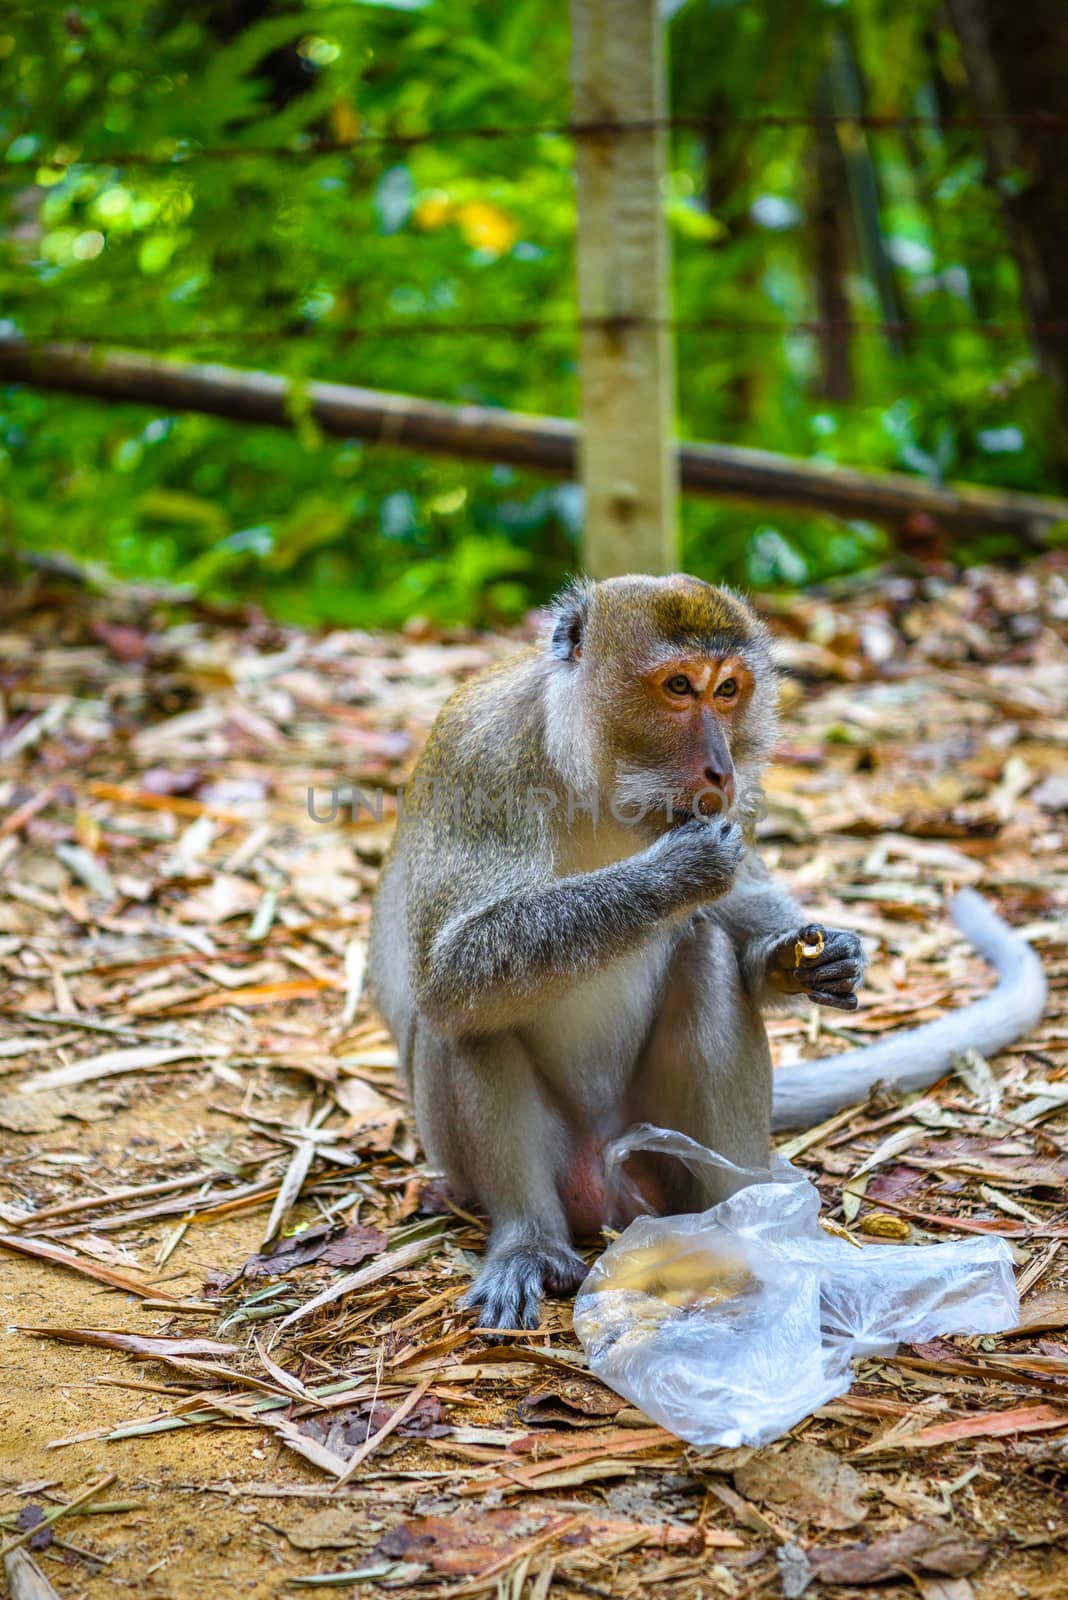 Macaque monkey is eating nuts, Khlong Phanom National Park, Kapong, Phang-nga, Thailand